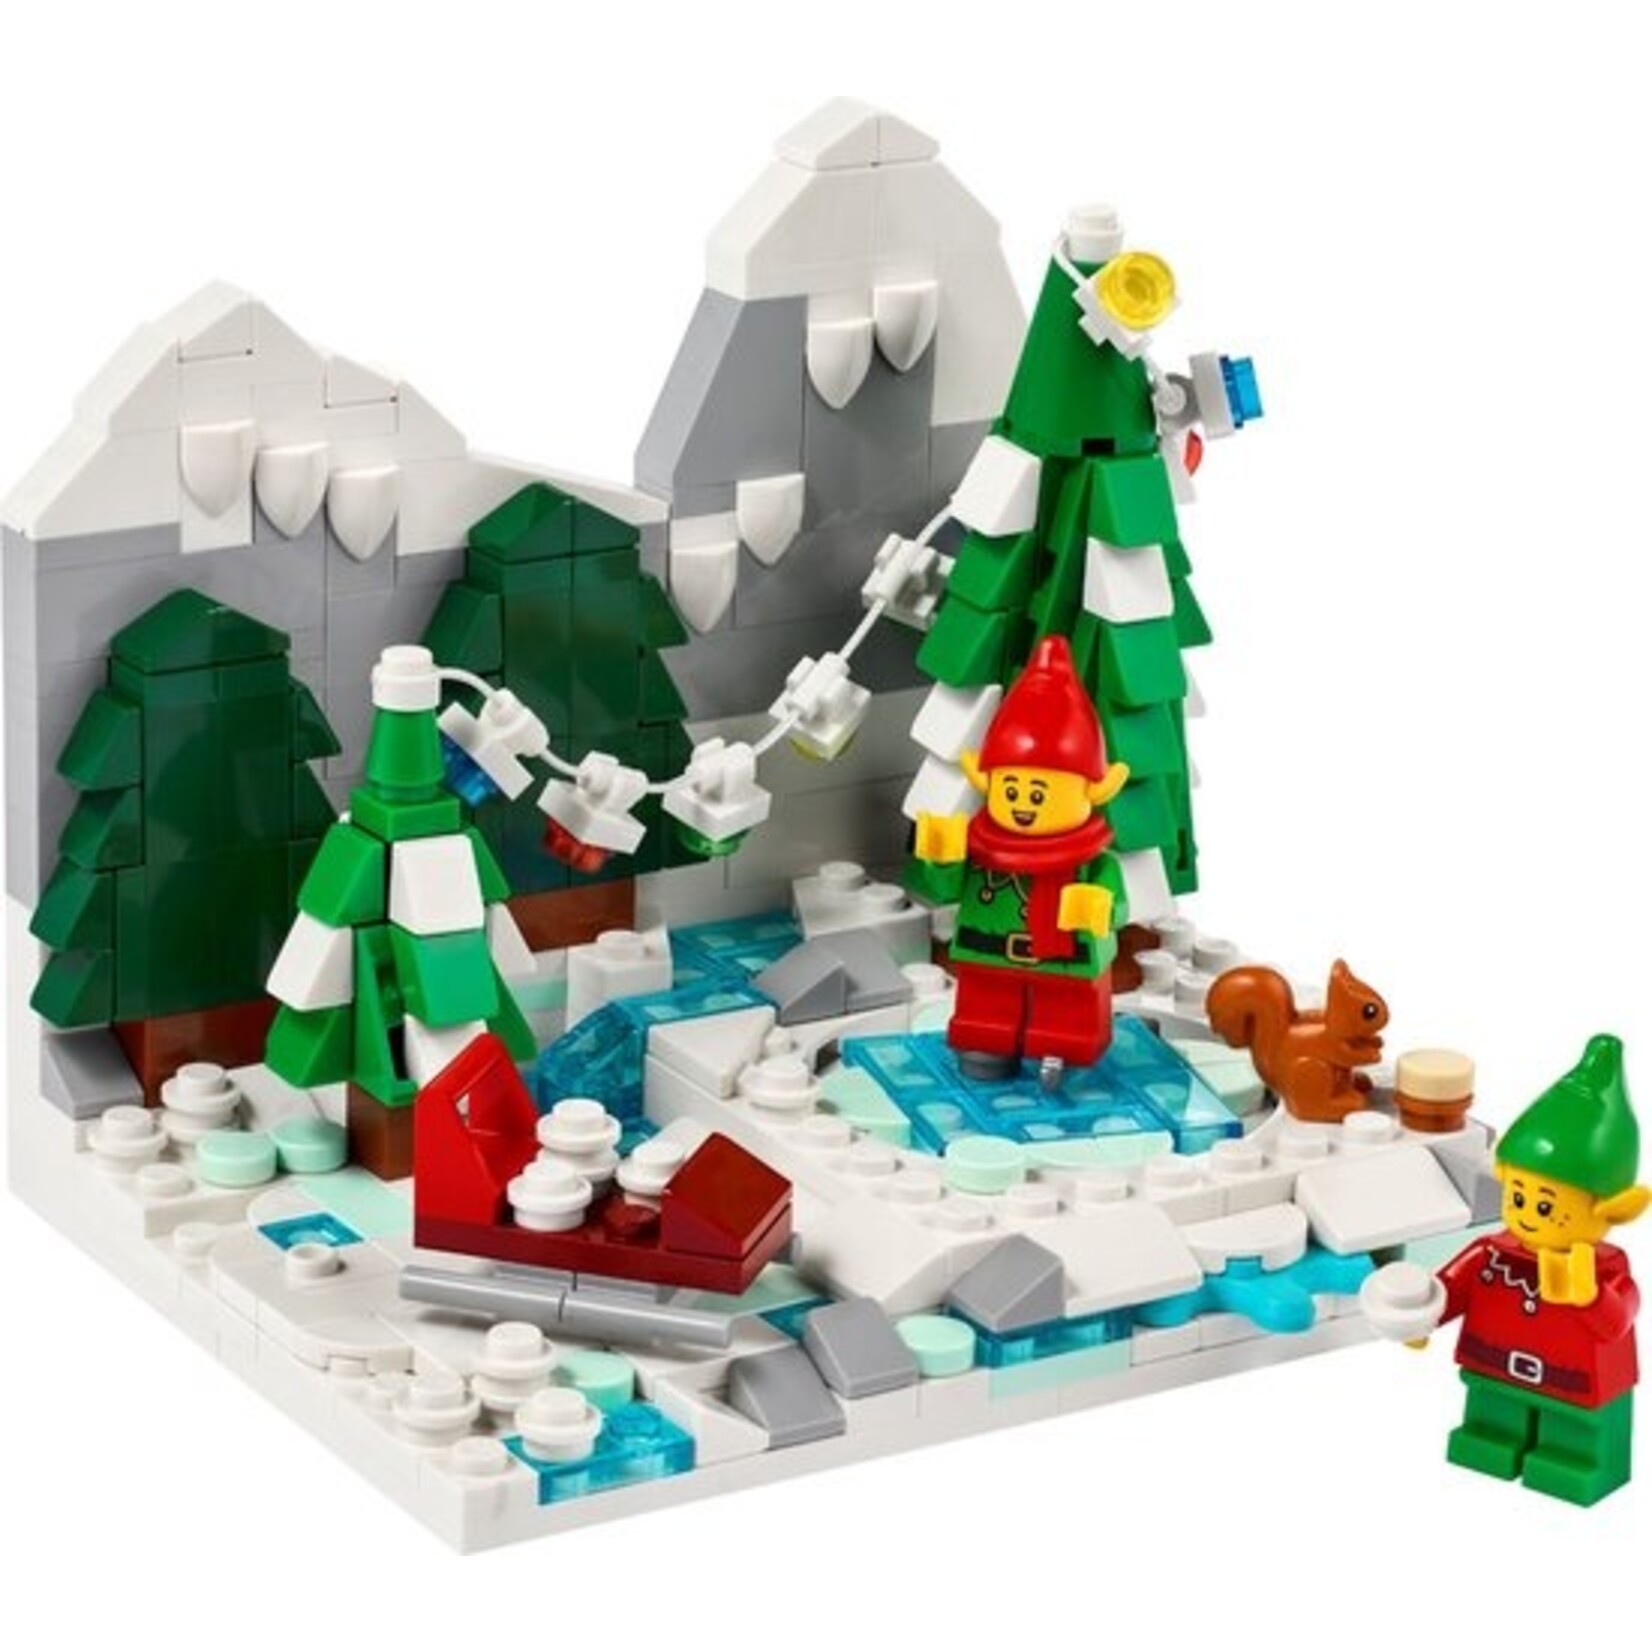 LEGO LEGO - Wintertafereel met elfen